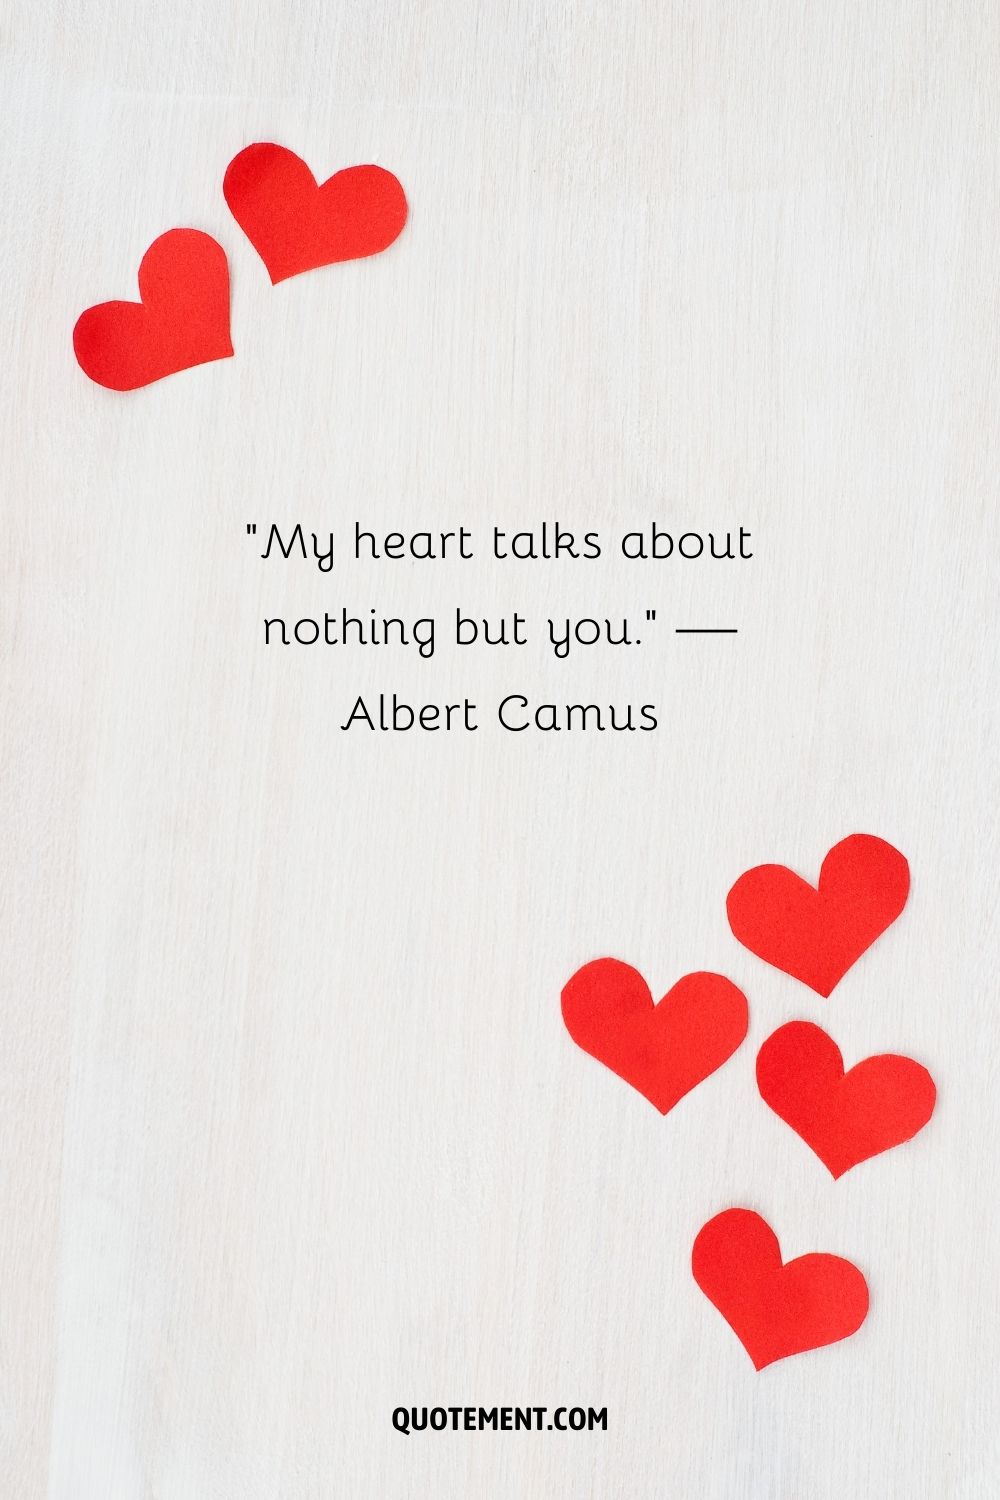 A white canvas embraces six heartfelt red hearts.